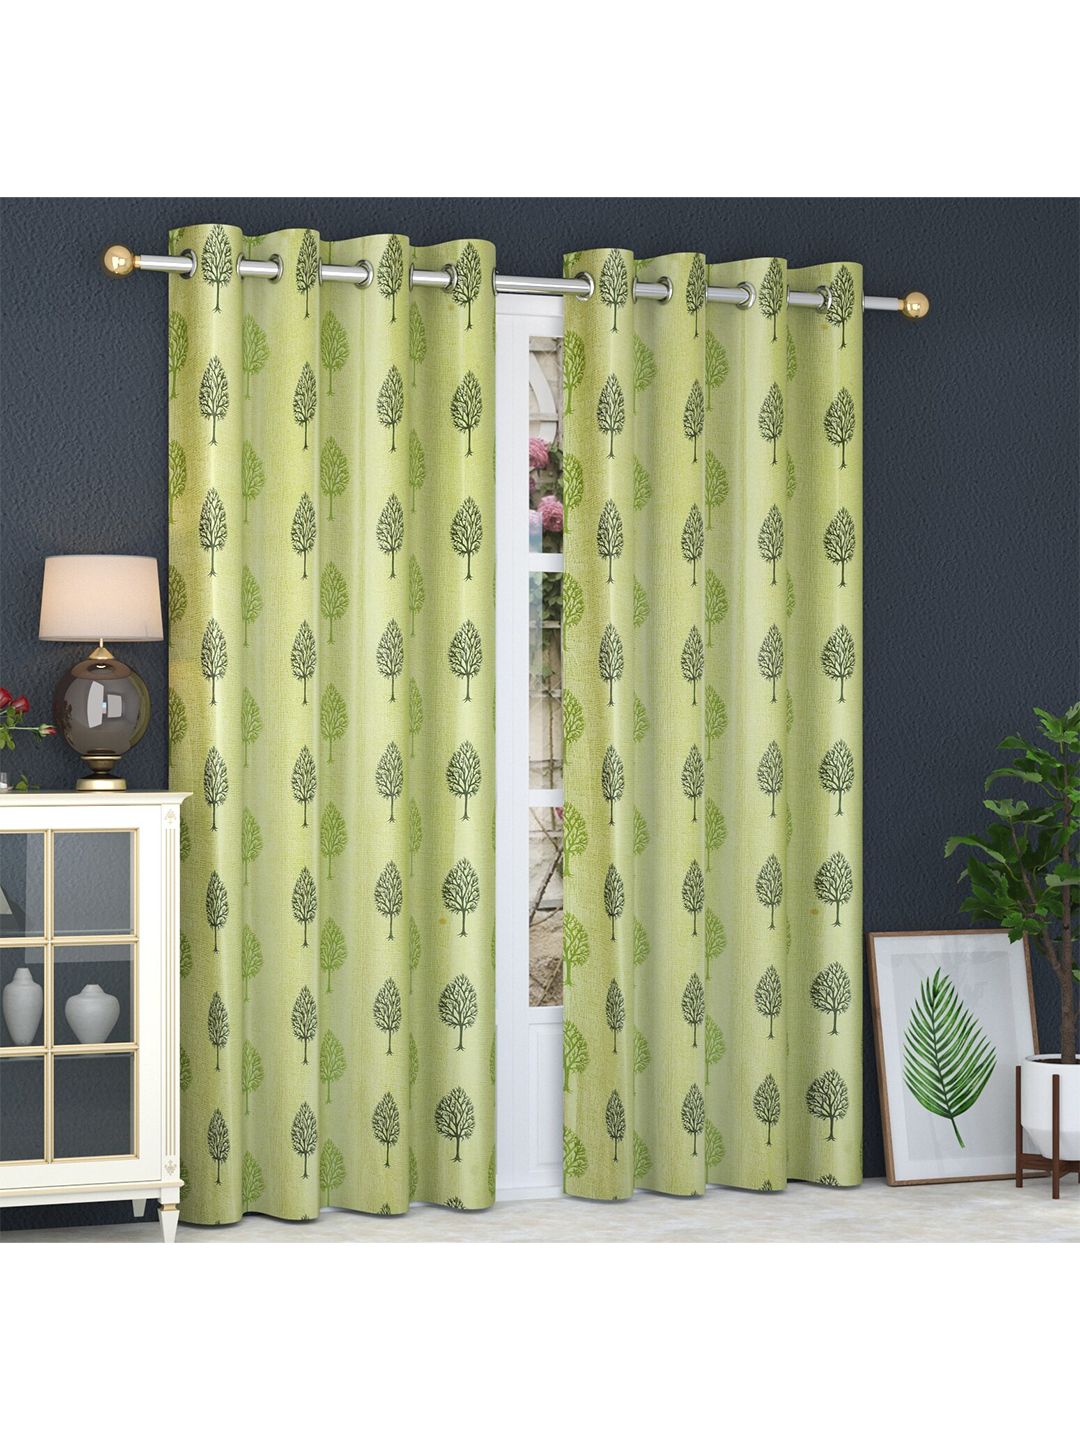 MULTITEX Green & Grey Printed Window Curtain Set of 2 Price in India